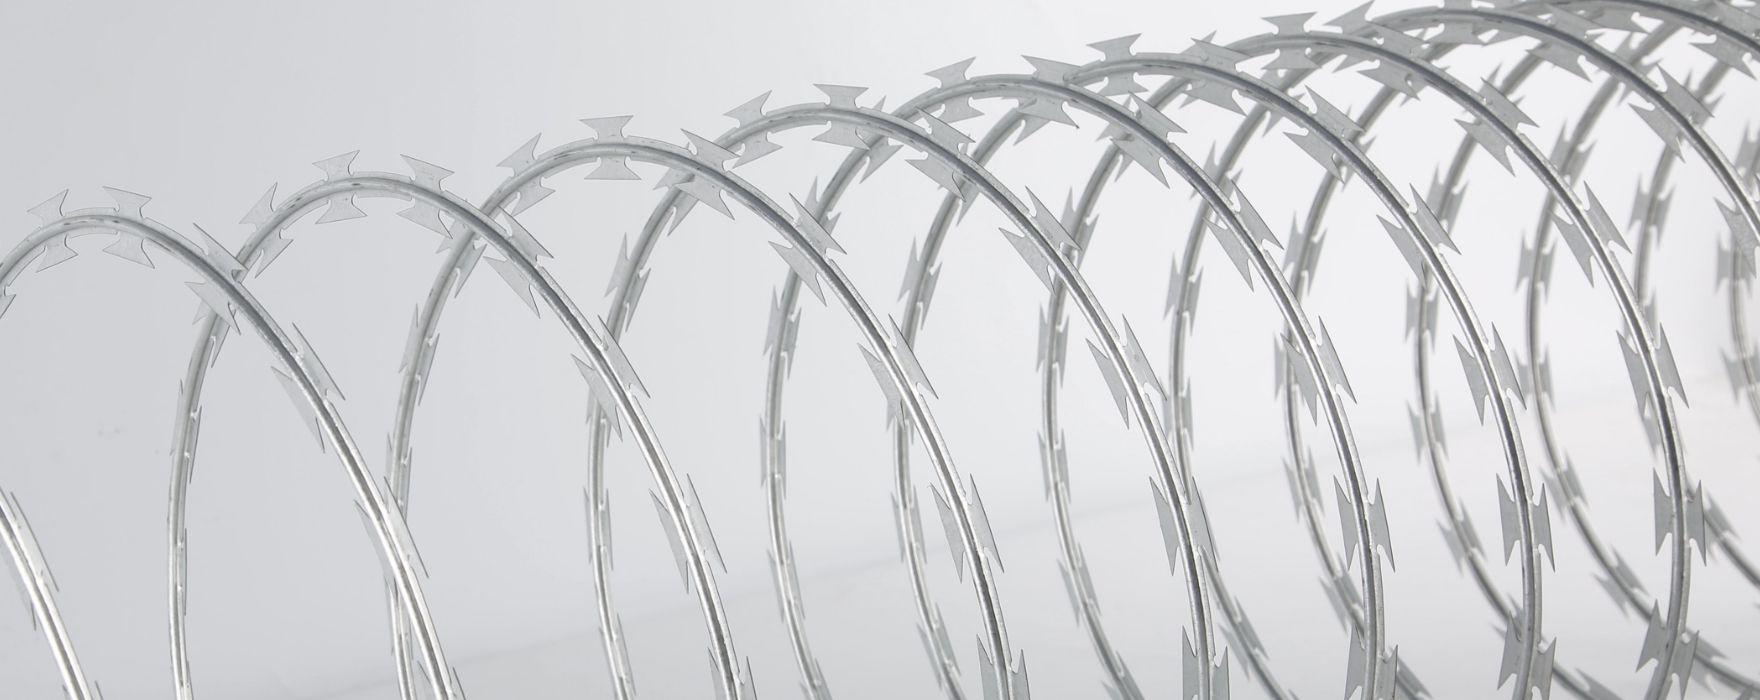 Single coil razor wire details display.